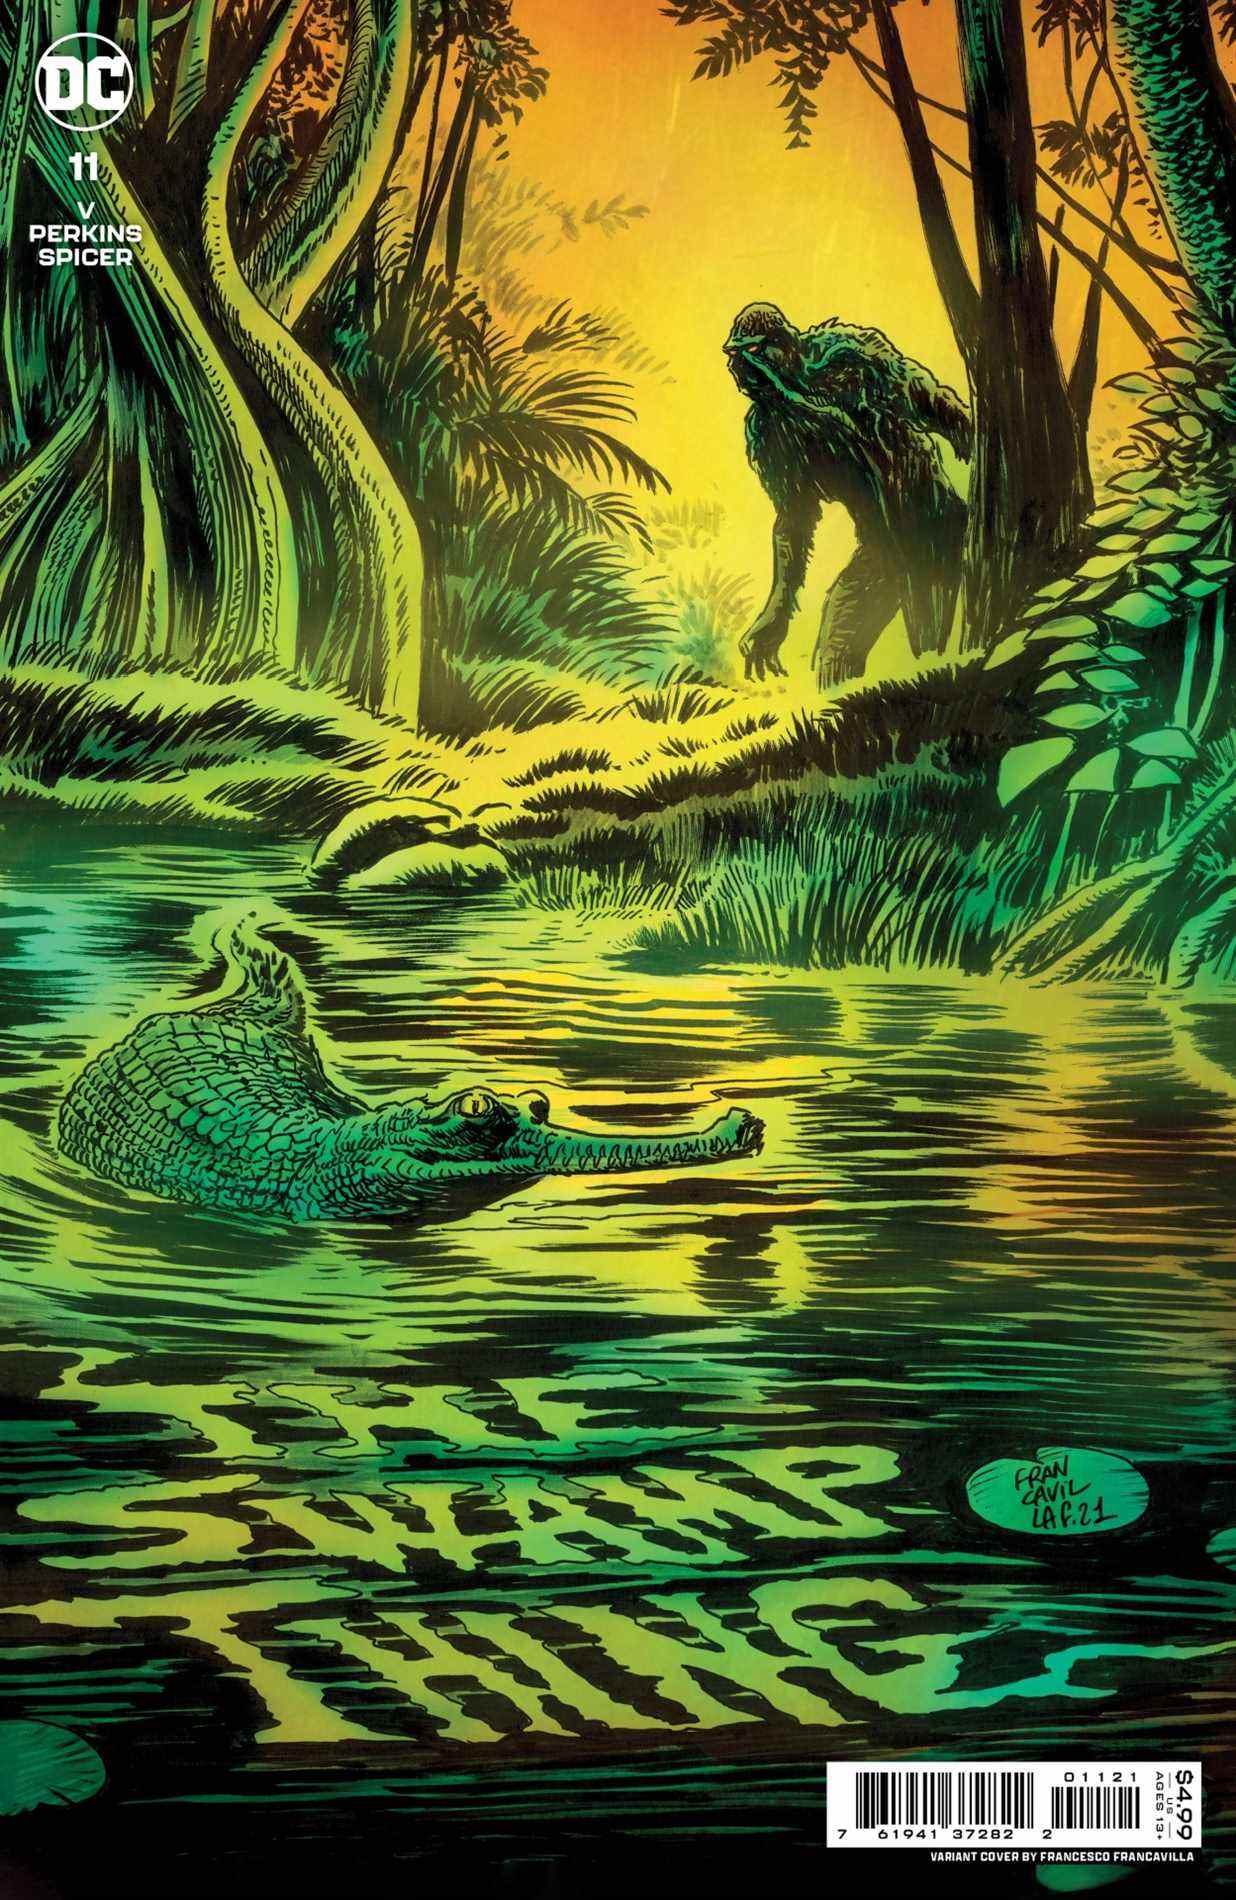 Couverture de The Swamp Thing #11